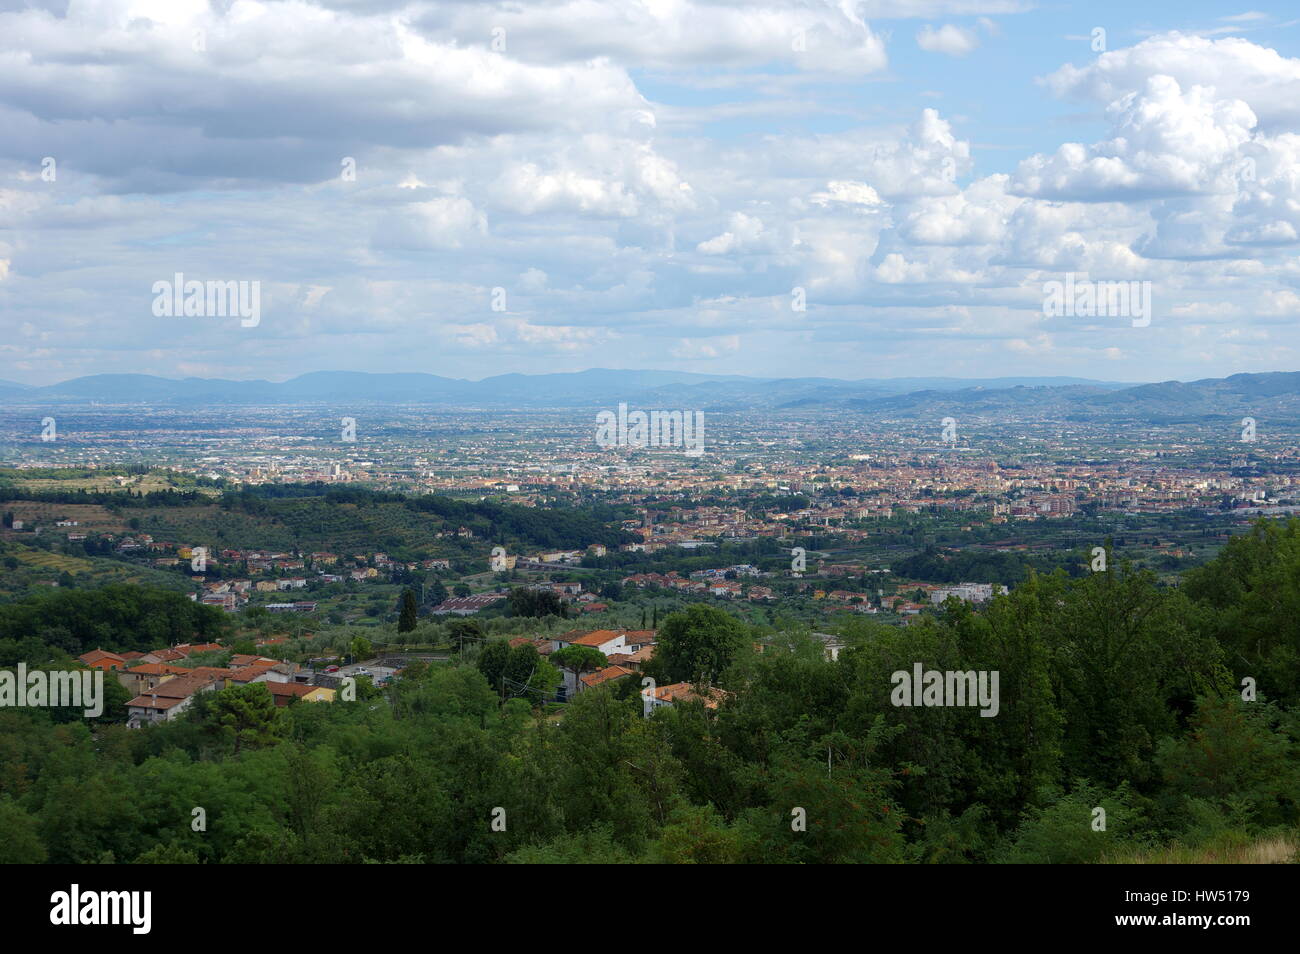 Pistoia (Capital de la cultura italiana 2017) skyline paisaje urbano bajo un hermoso cielo - paisaje de montaña vista panorámica y cloudscape - Toscana, Italia Foto de stock